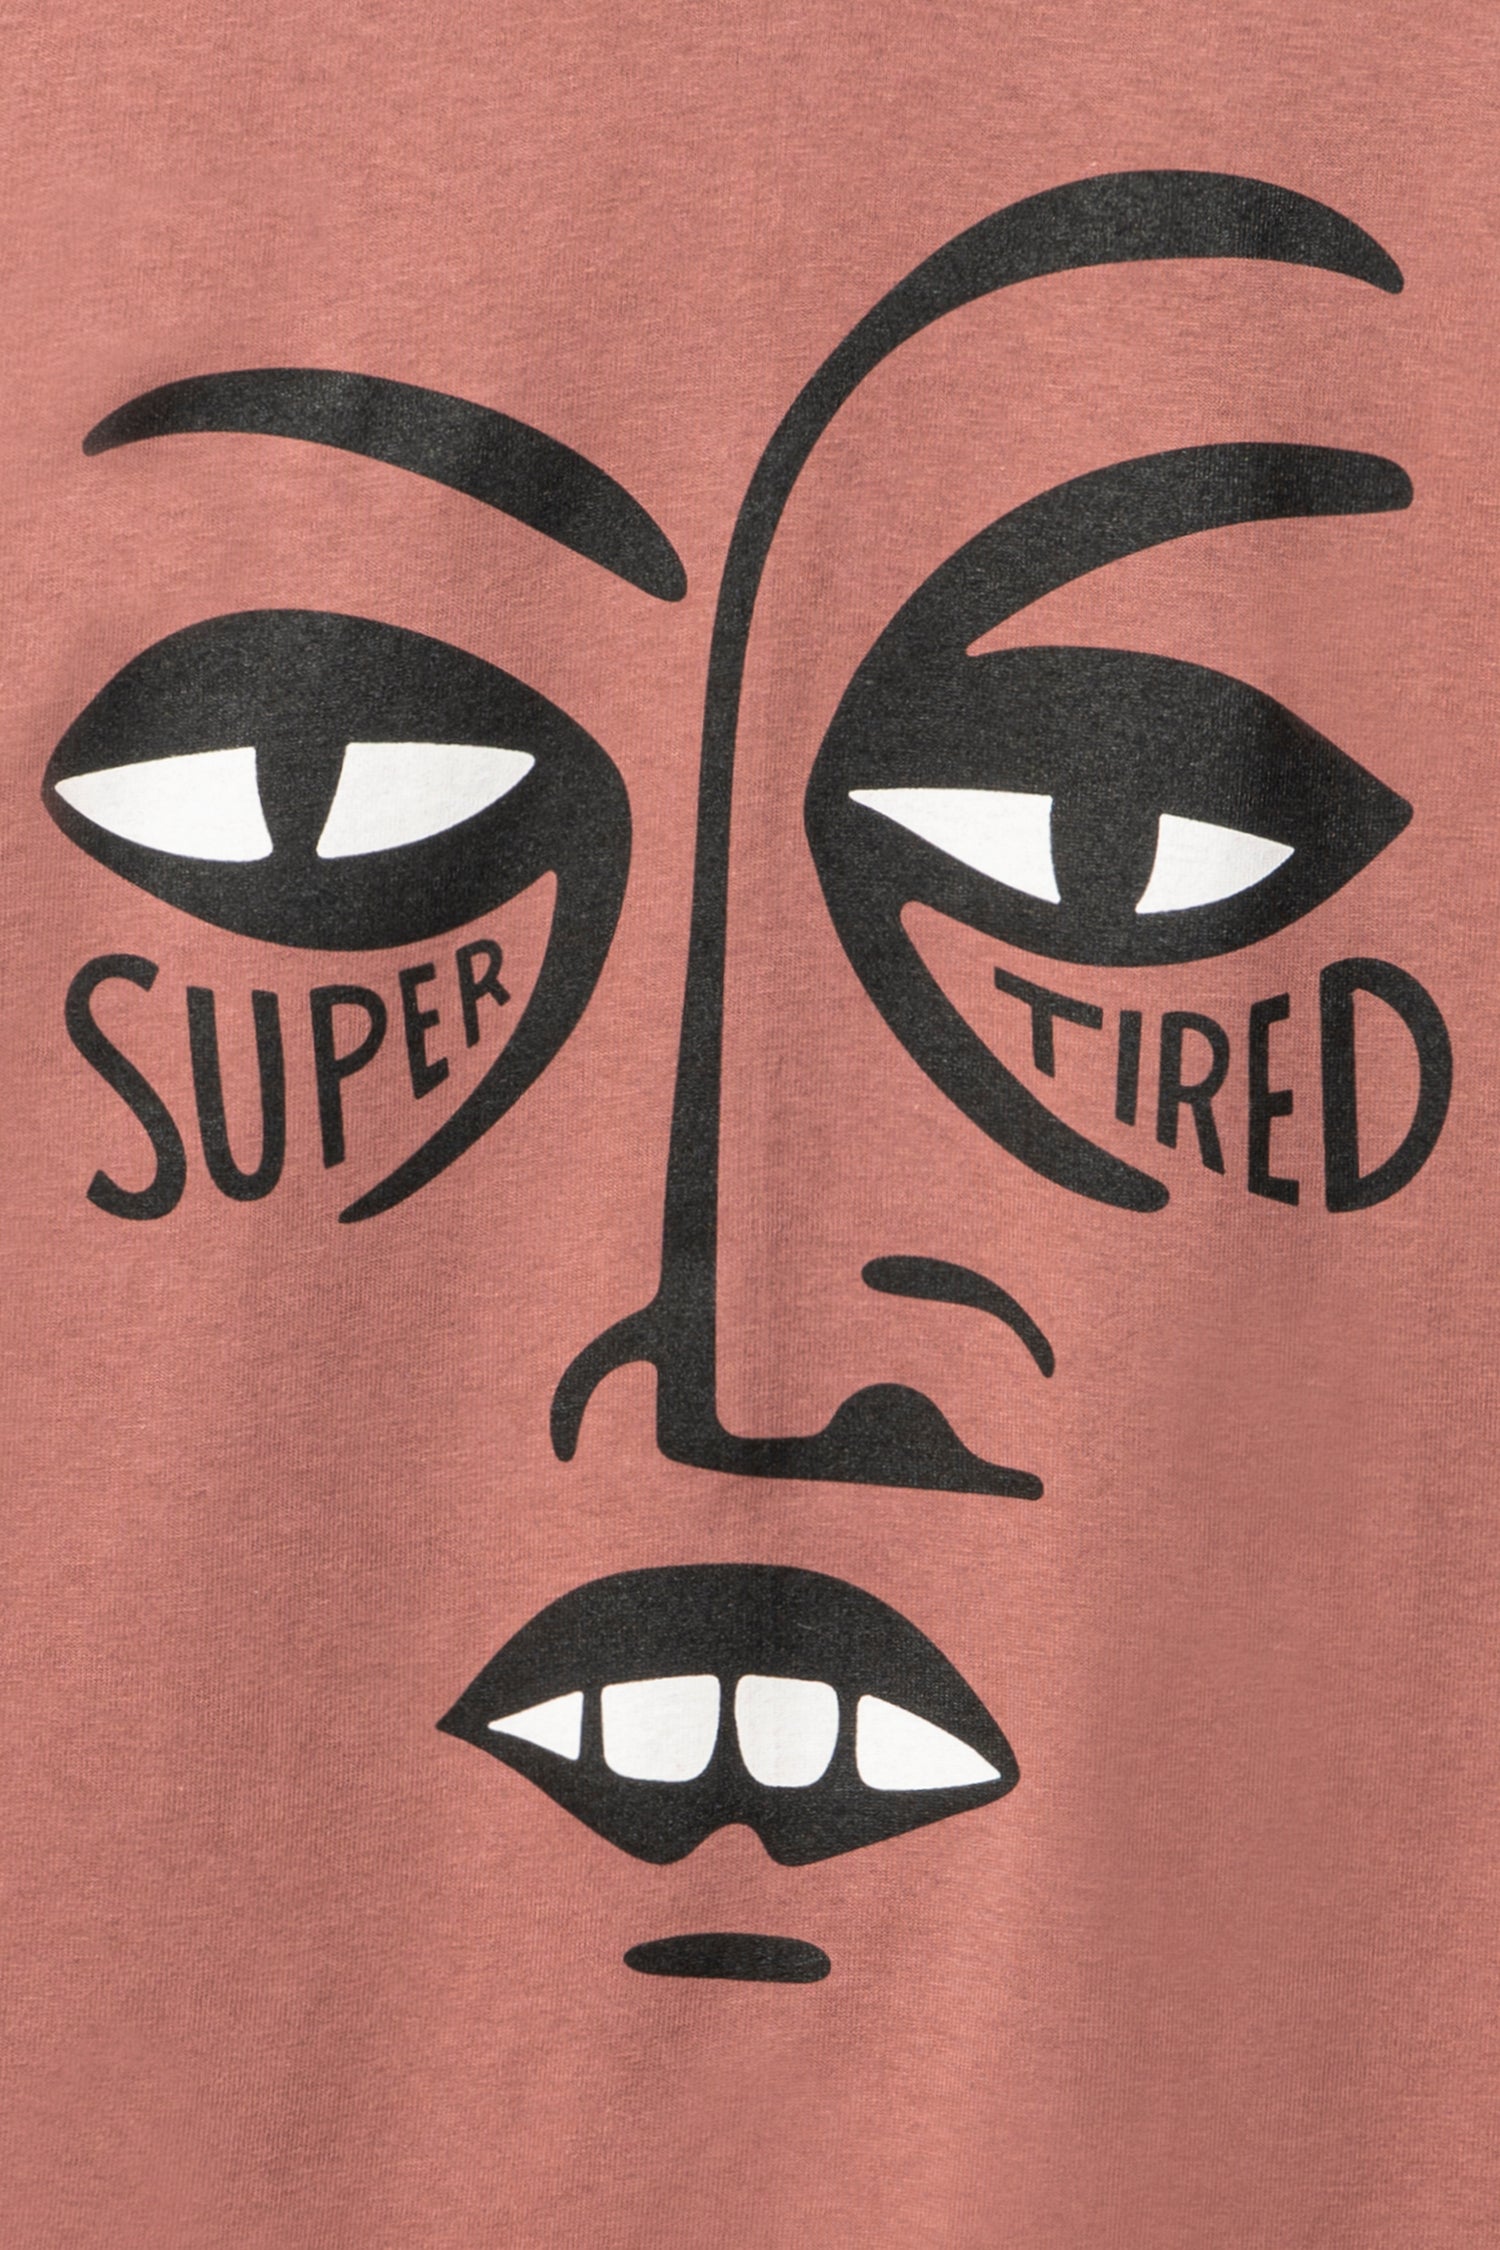 Selectshop FRAME - TIRED Super Tired Tee T-Shirts Dubai